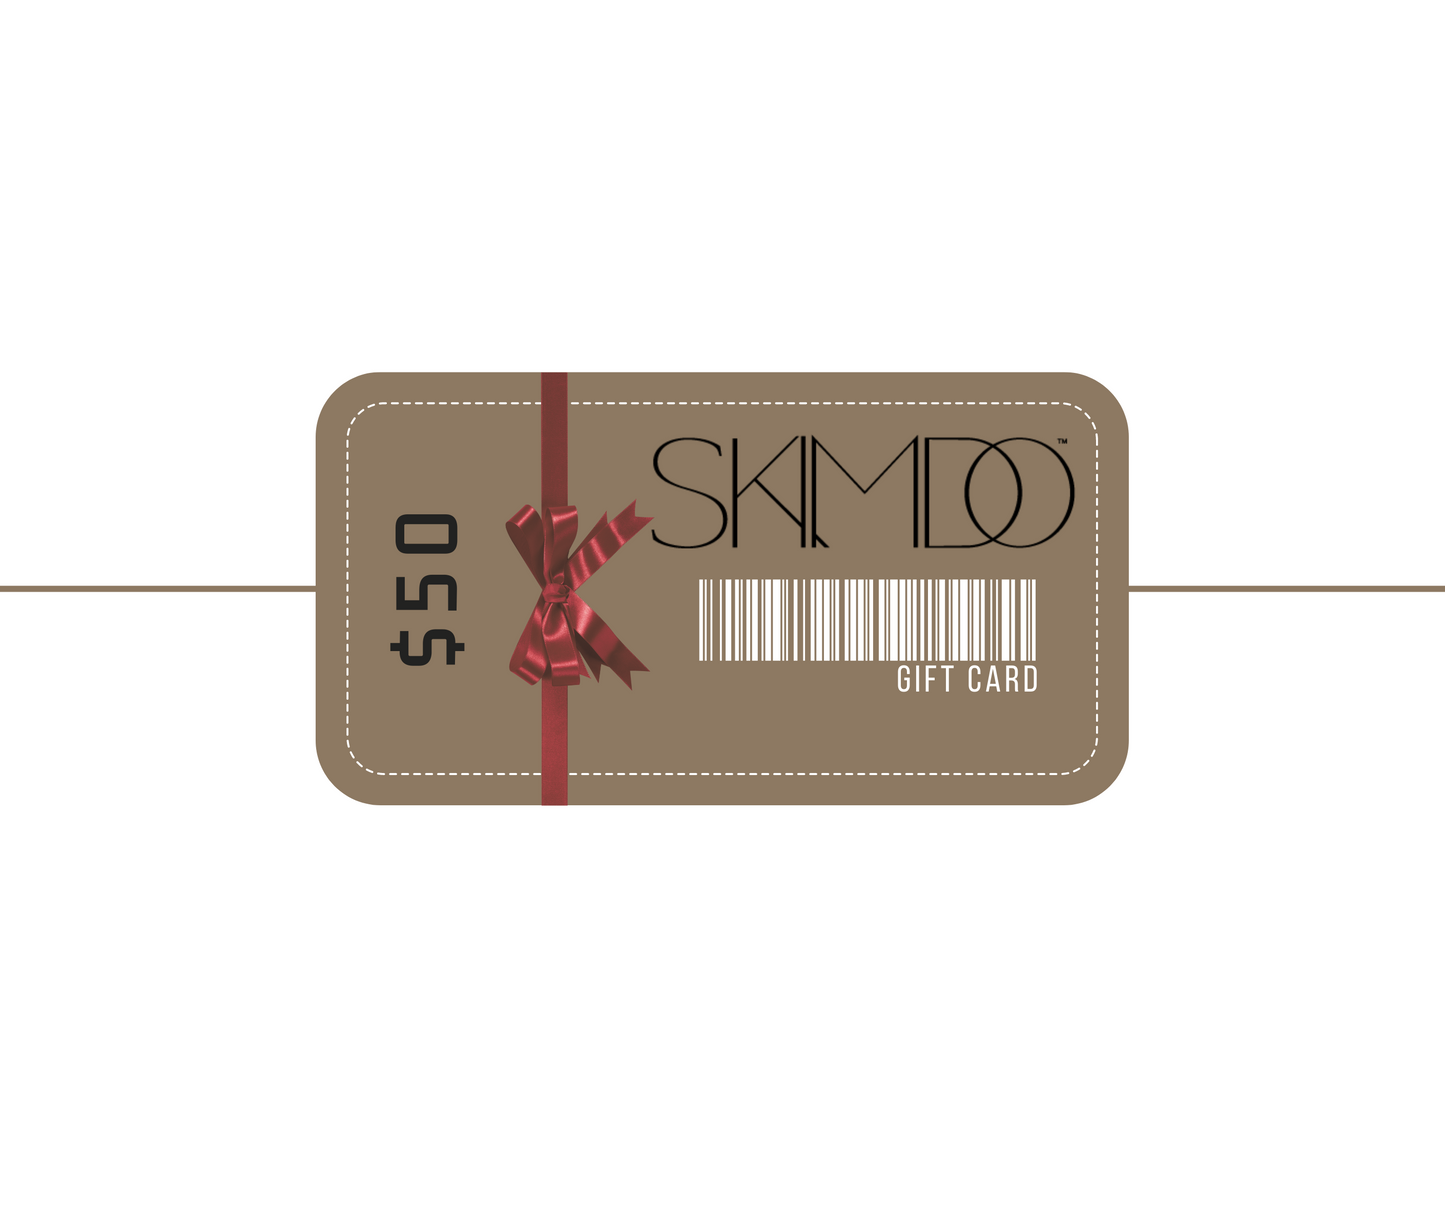 SKIMDO GIFT CARD